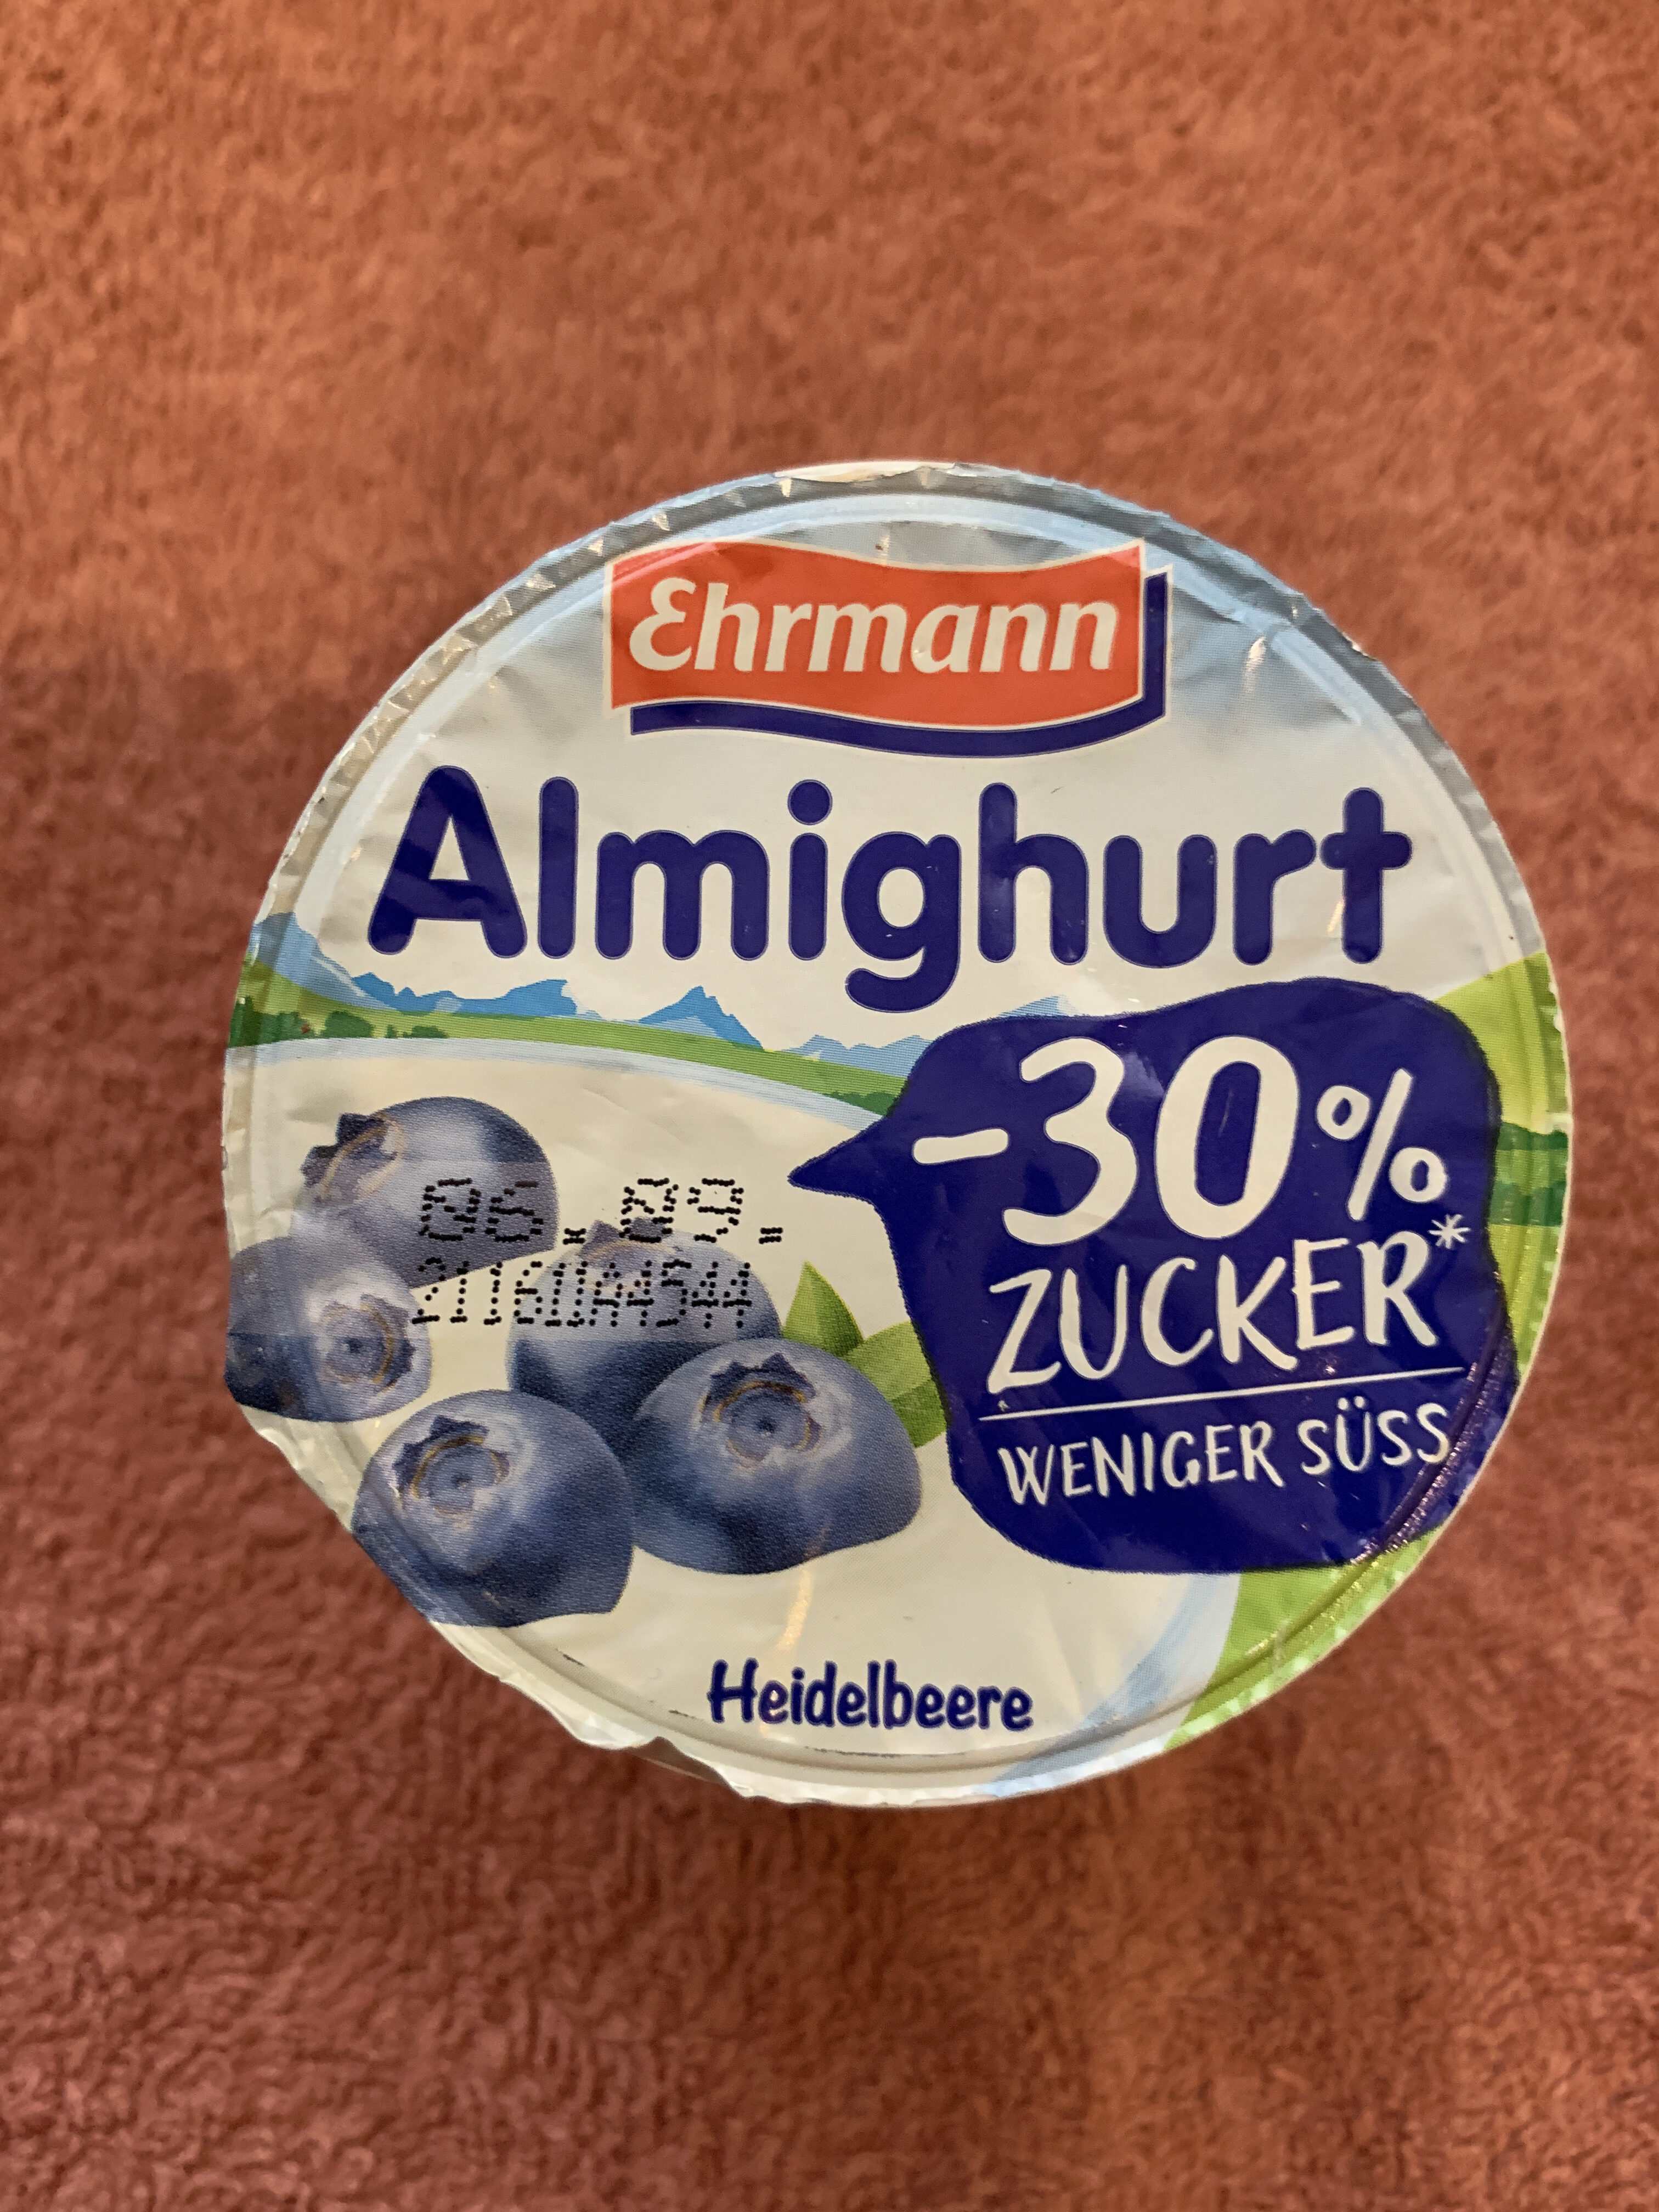 Almighurt weniger süß - Heidelbeere - Produit - de